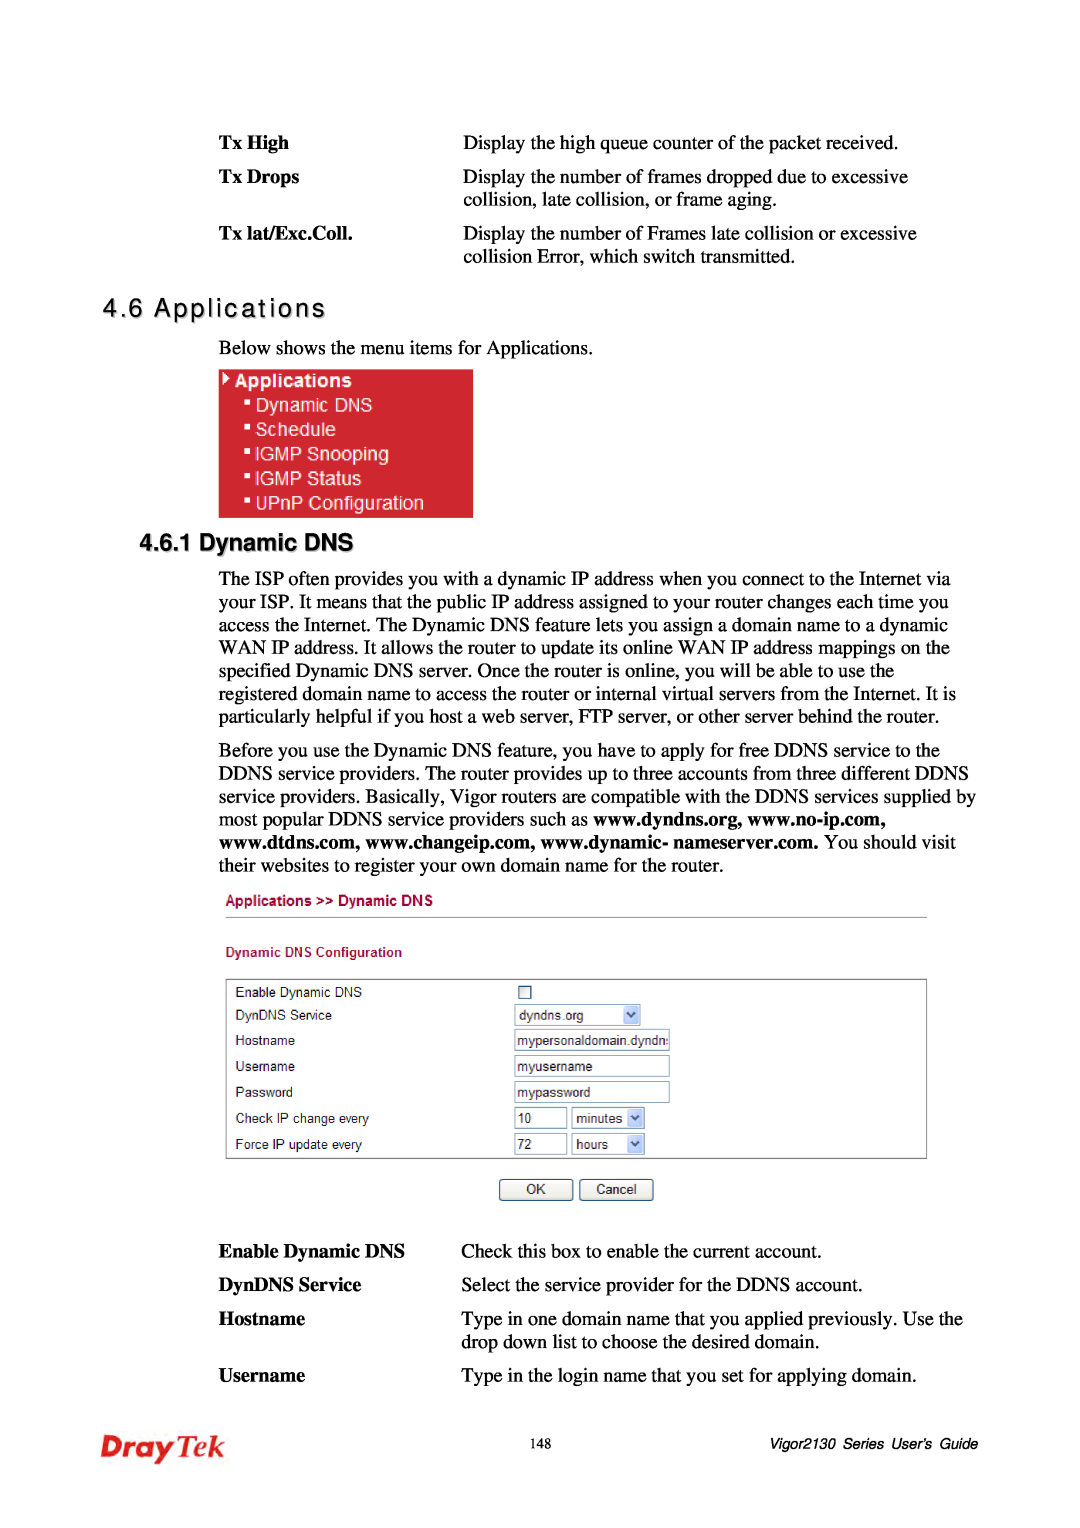 Draytek 2130 manual Applications, Dynamic DNS 